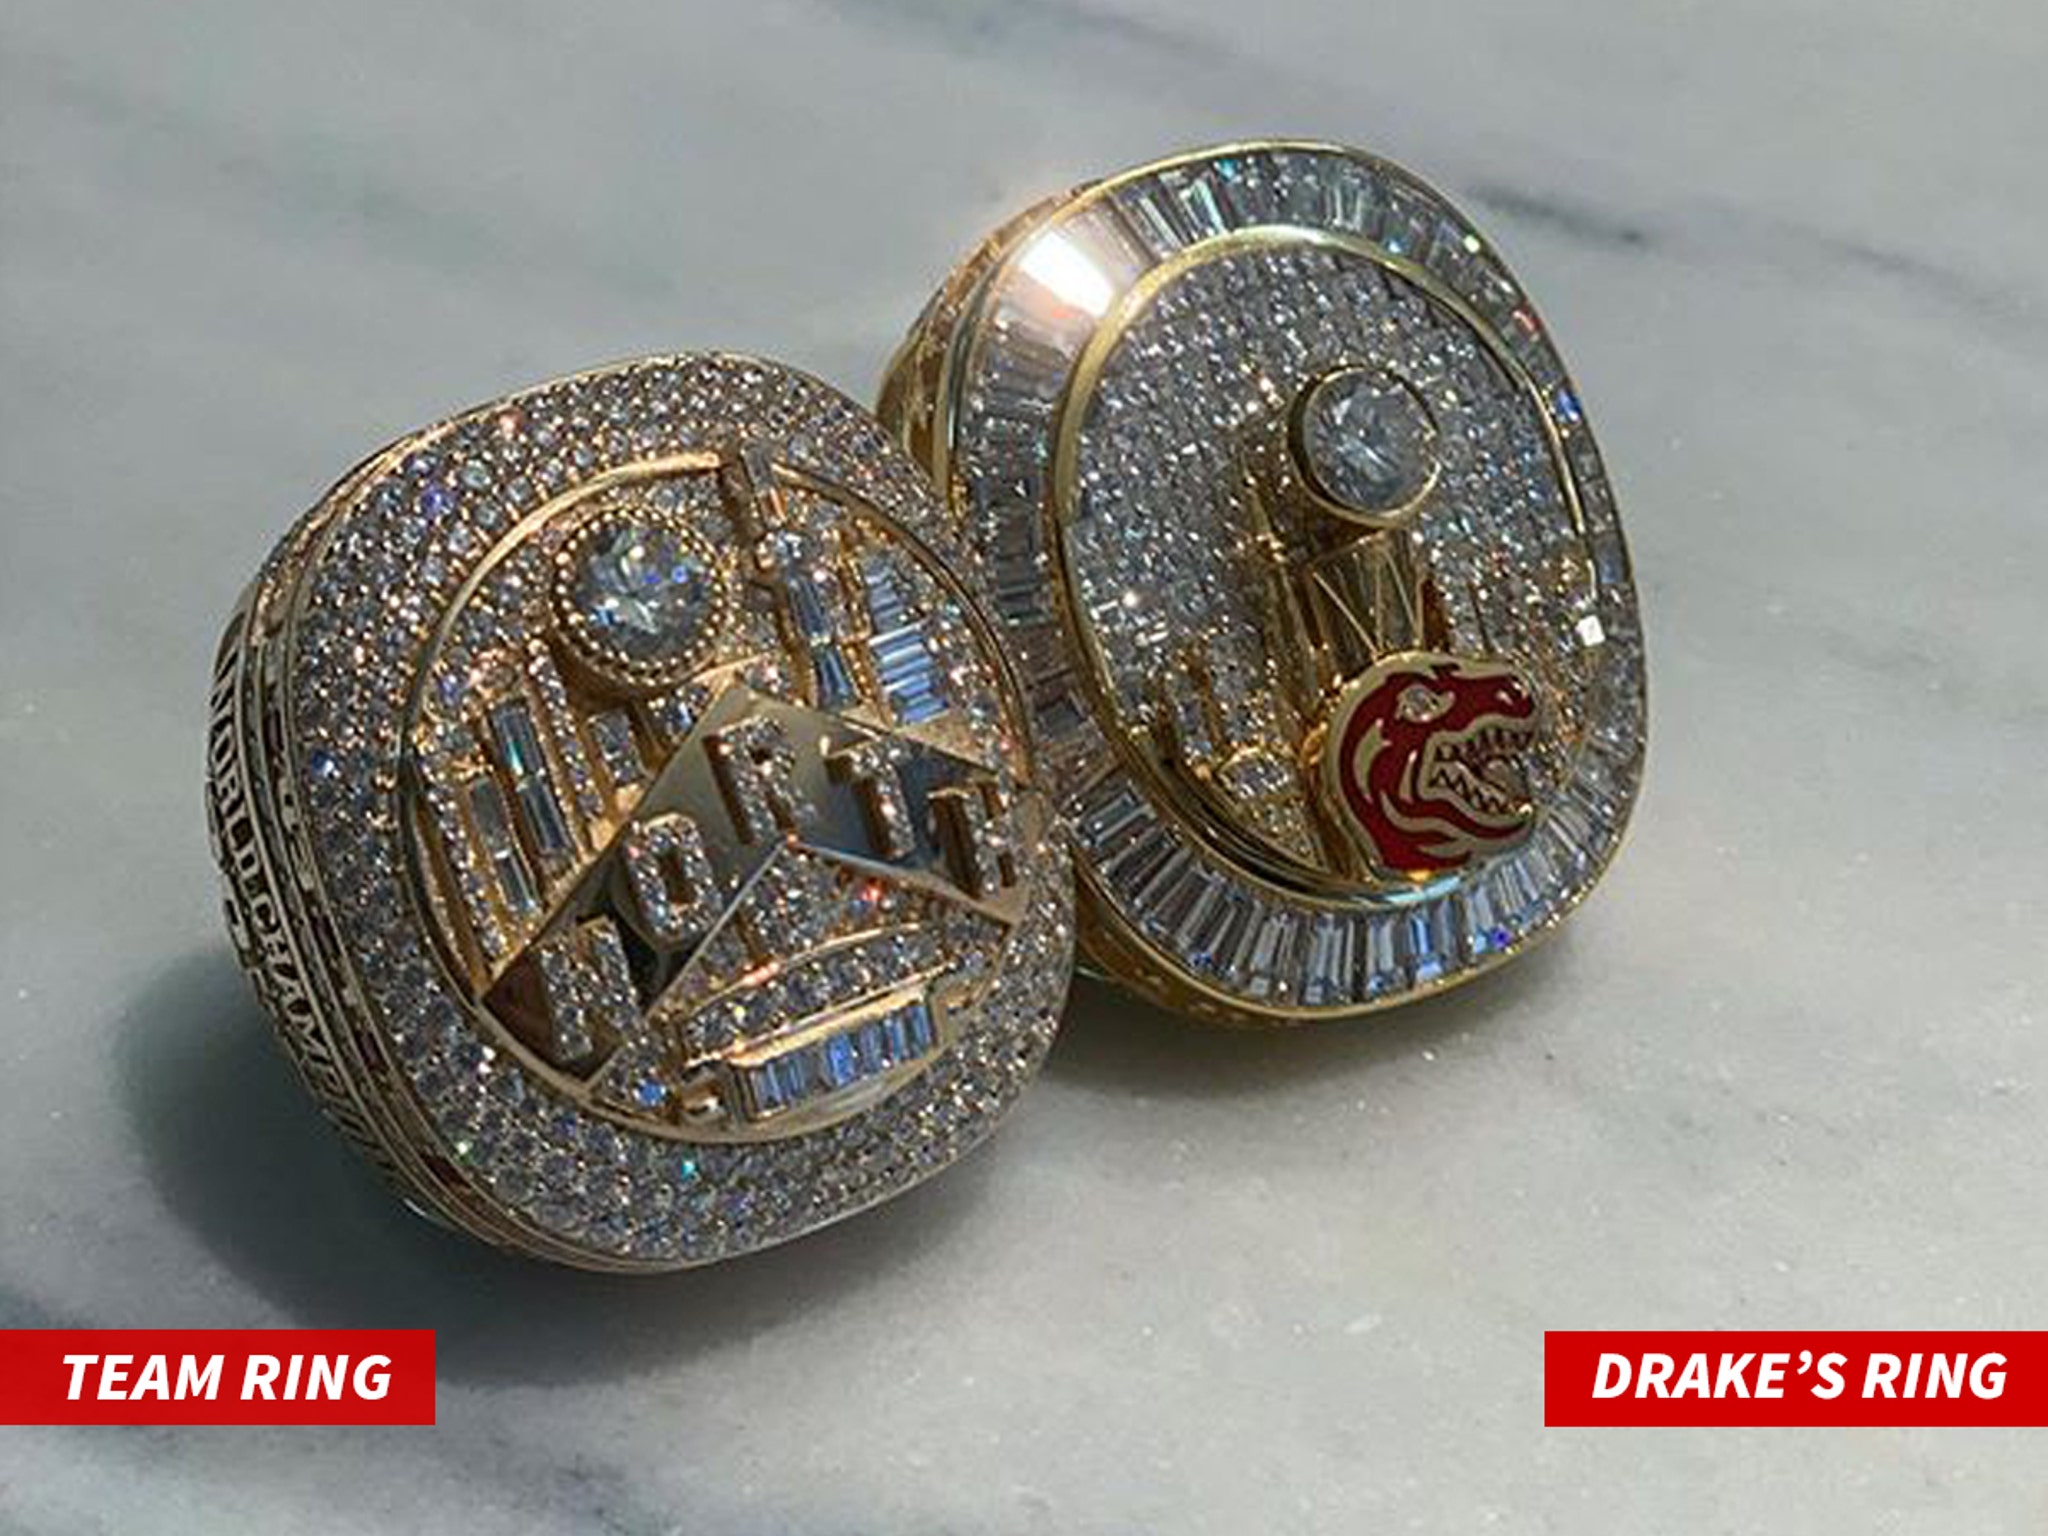 Raptors receive NBA's biggest championship rings ever